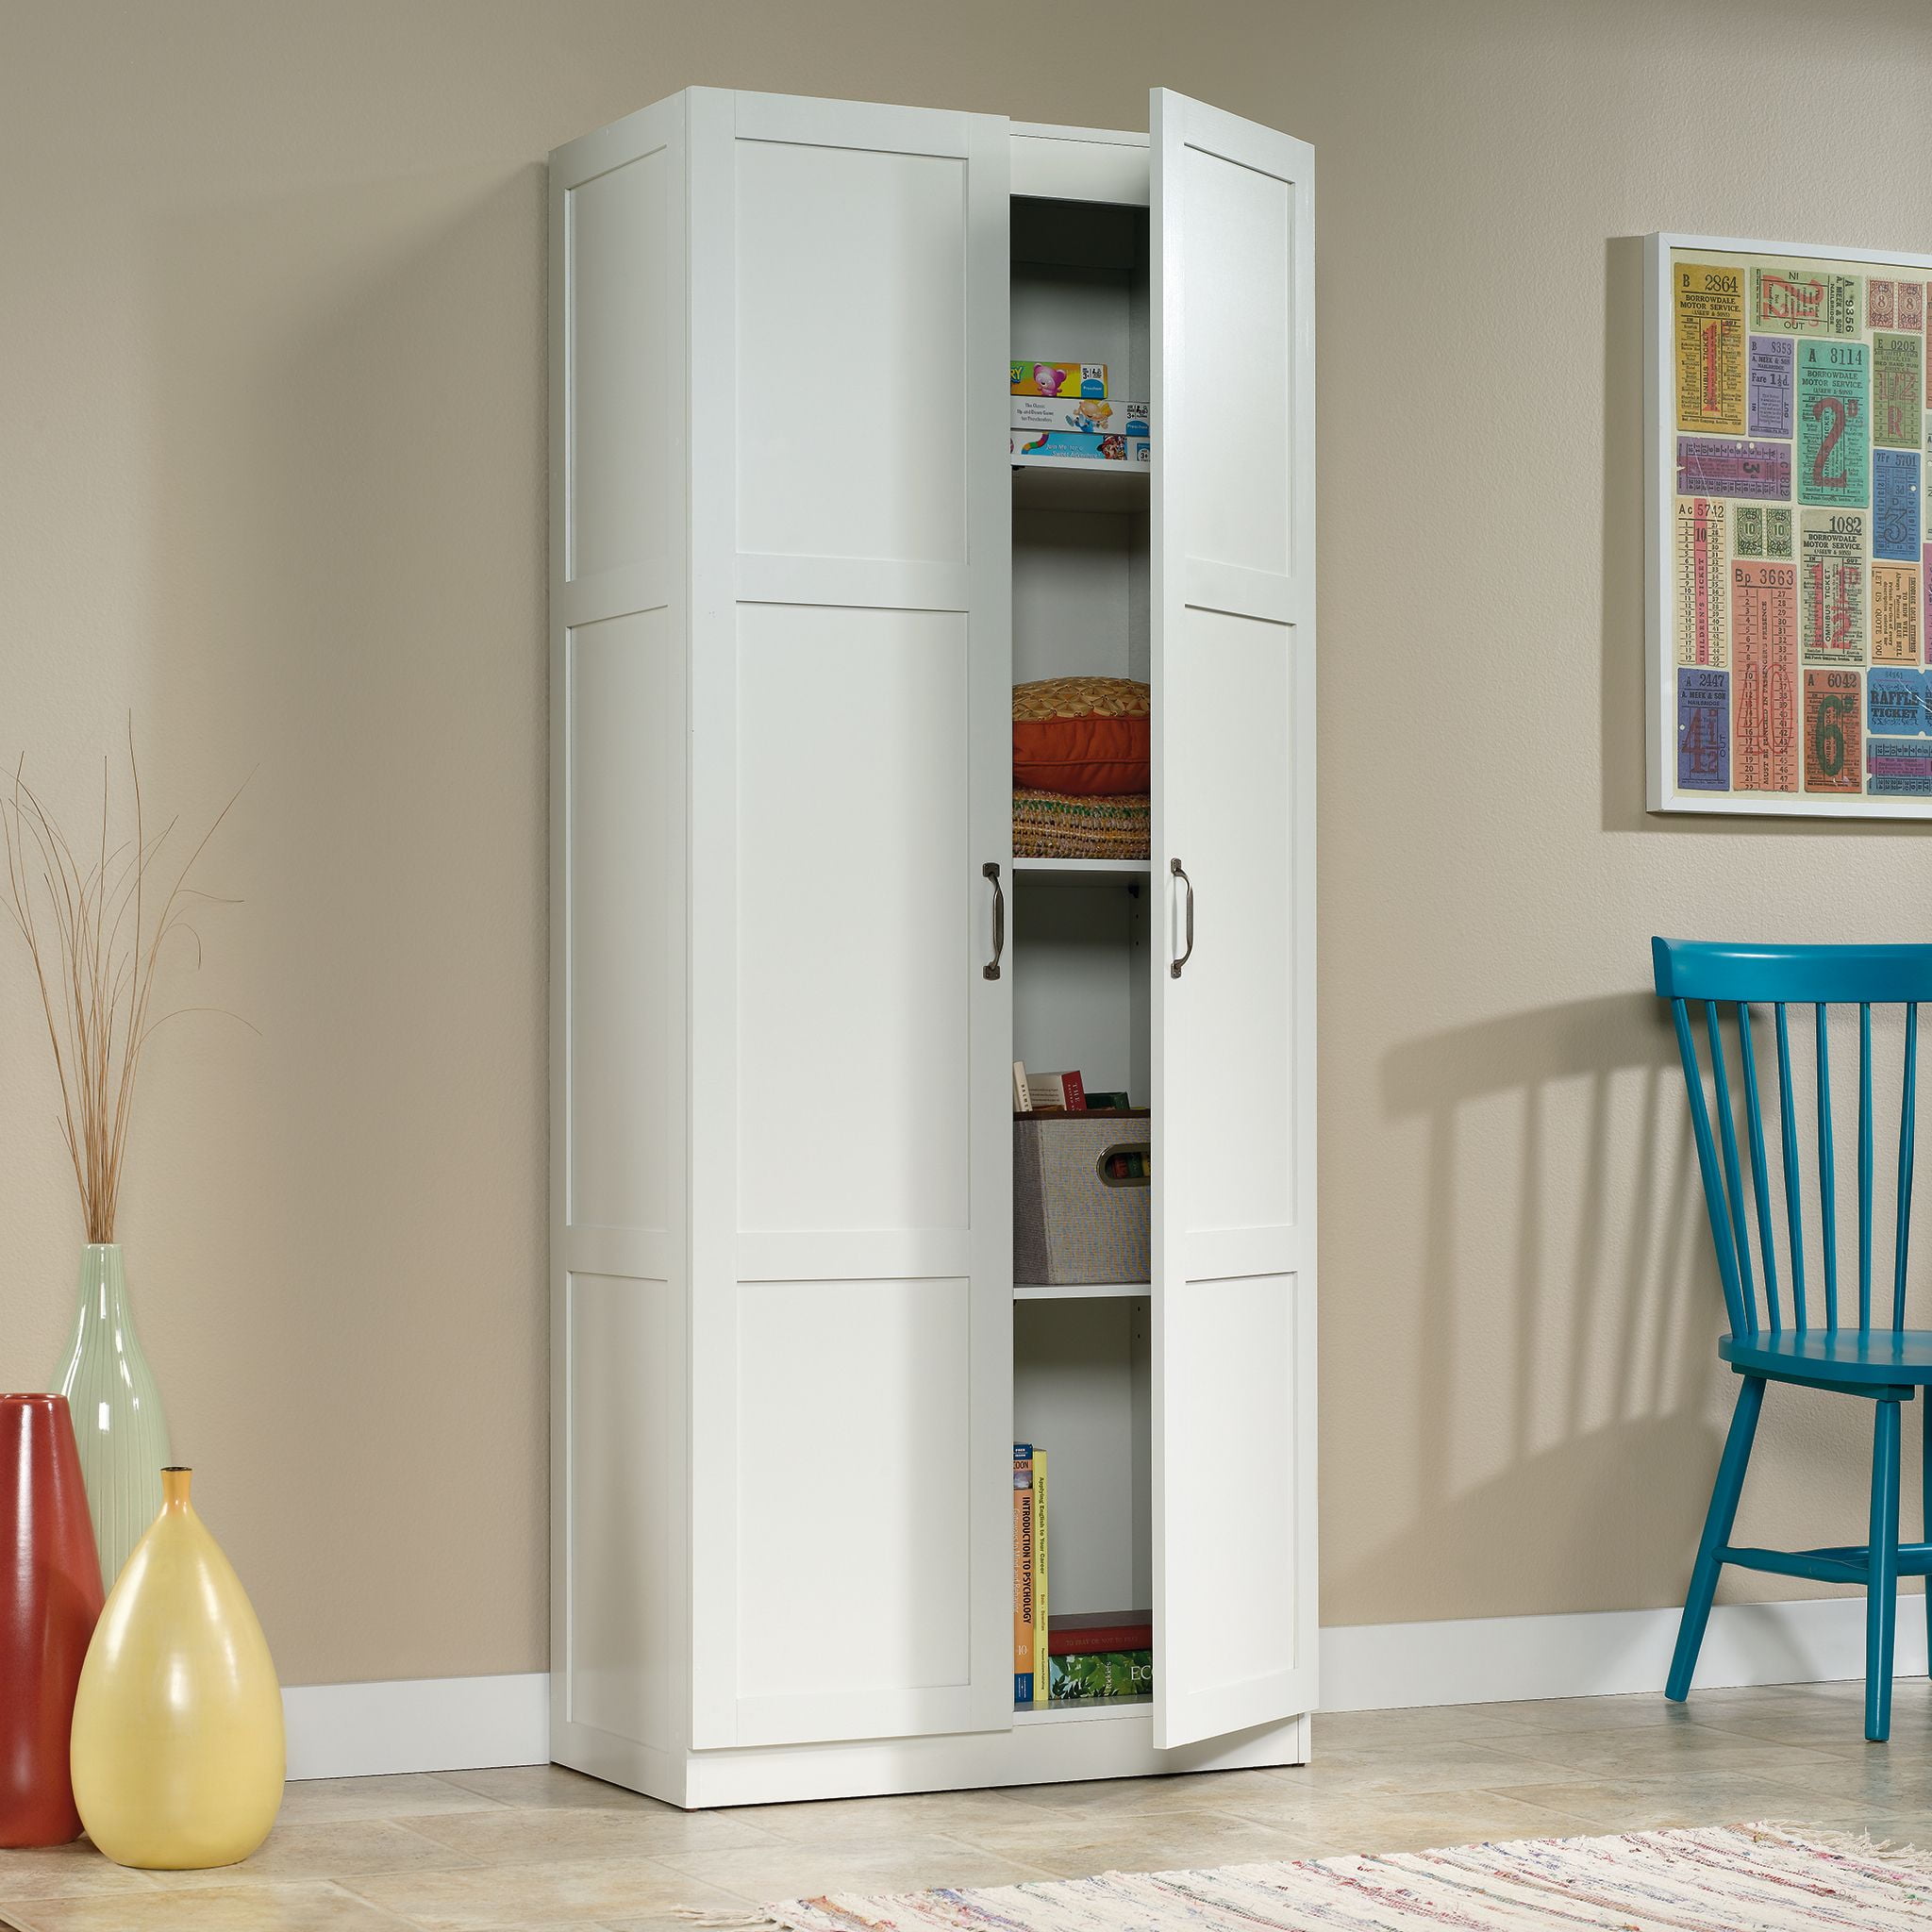 Sauder Select 2 Door Tall Storage, Sauder 2 Door Pantry Storage Cabinet White